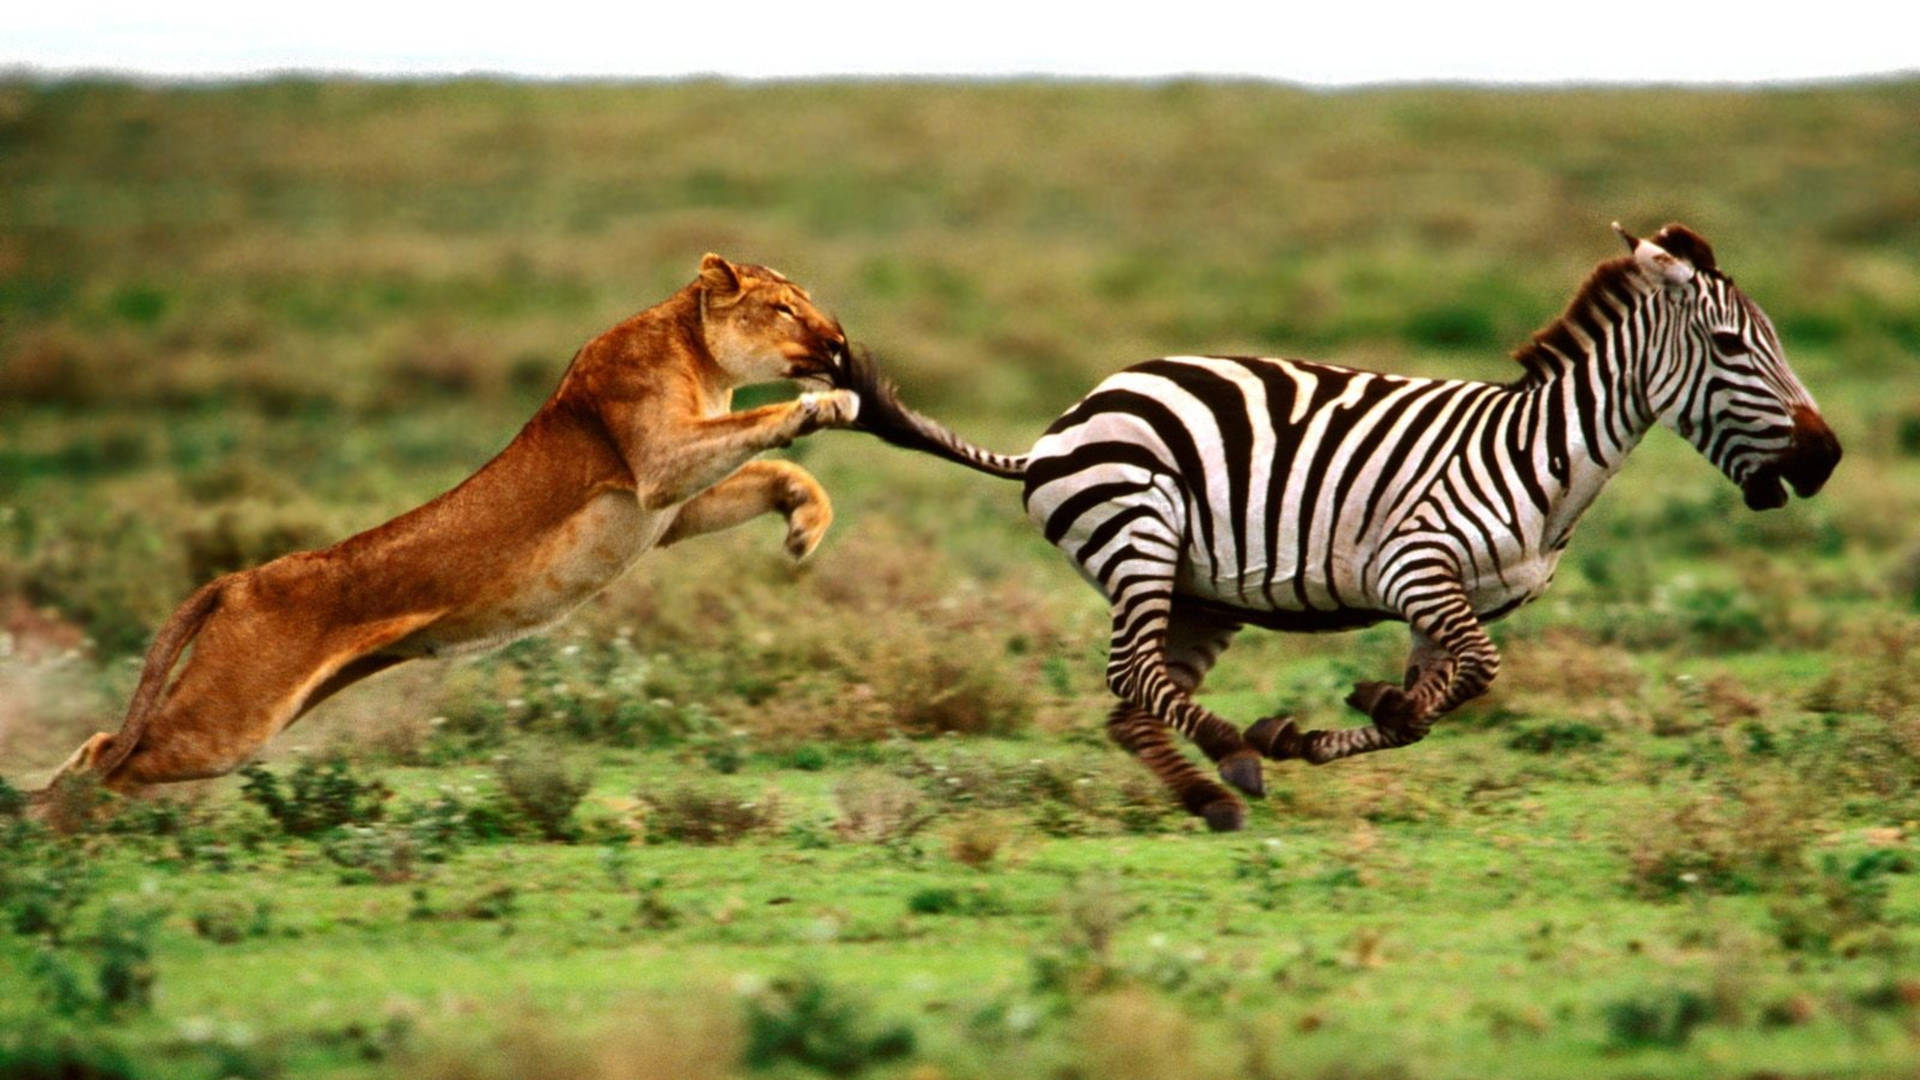 Lion Chasing Zebra